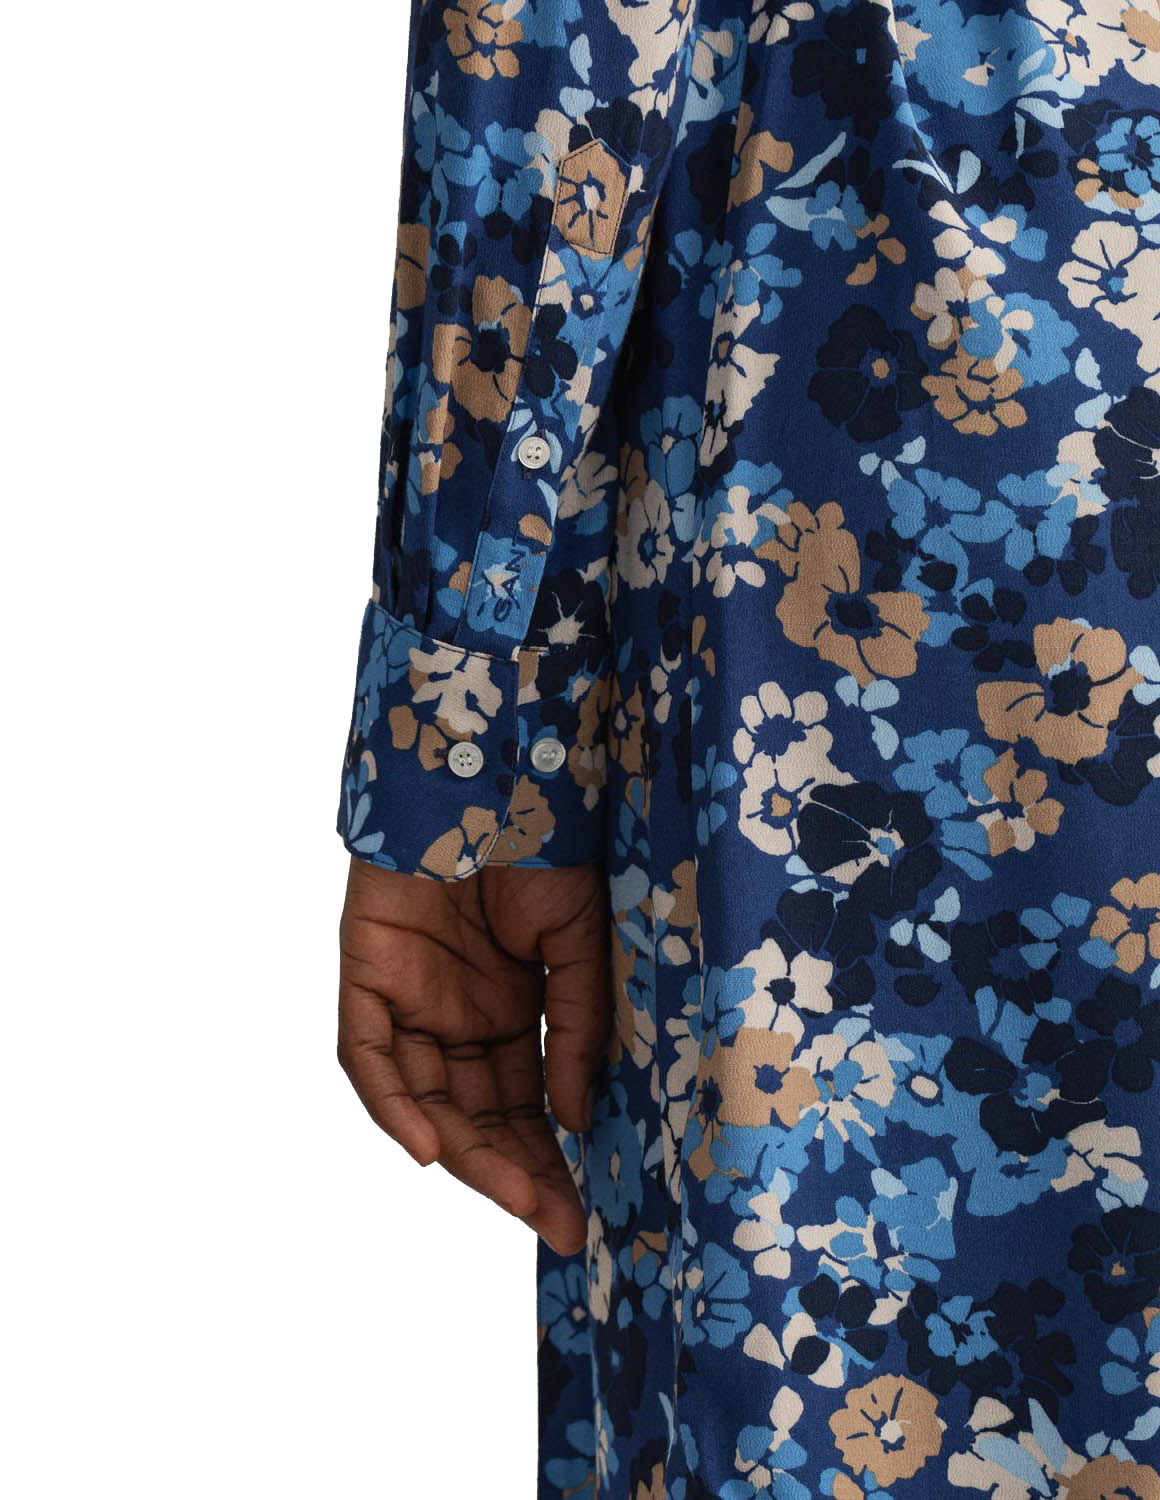 GANT WOMAN Shirt Dress floral μπλε με ζώνη στη μέση Loose Fit